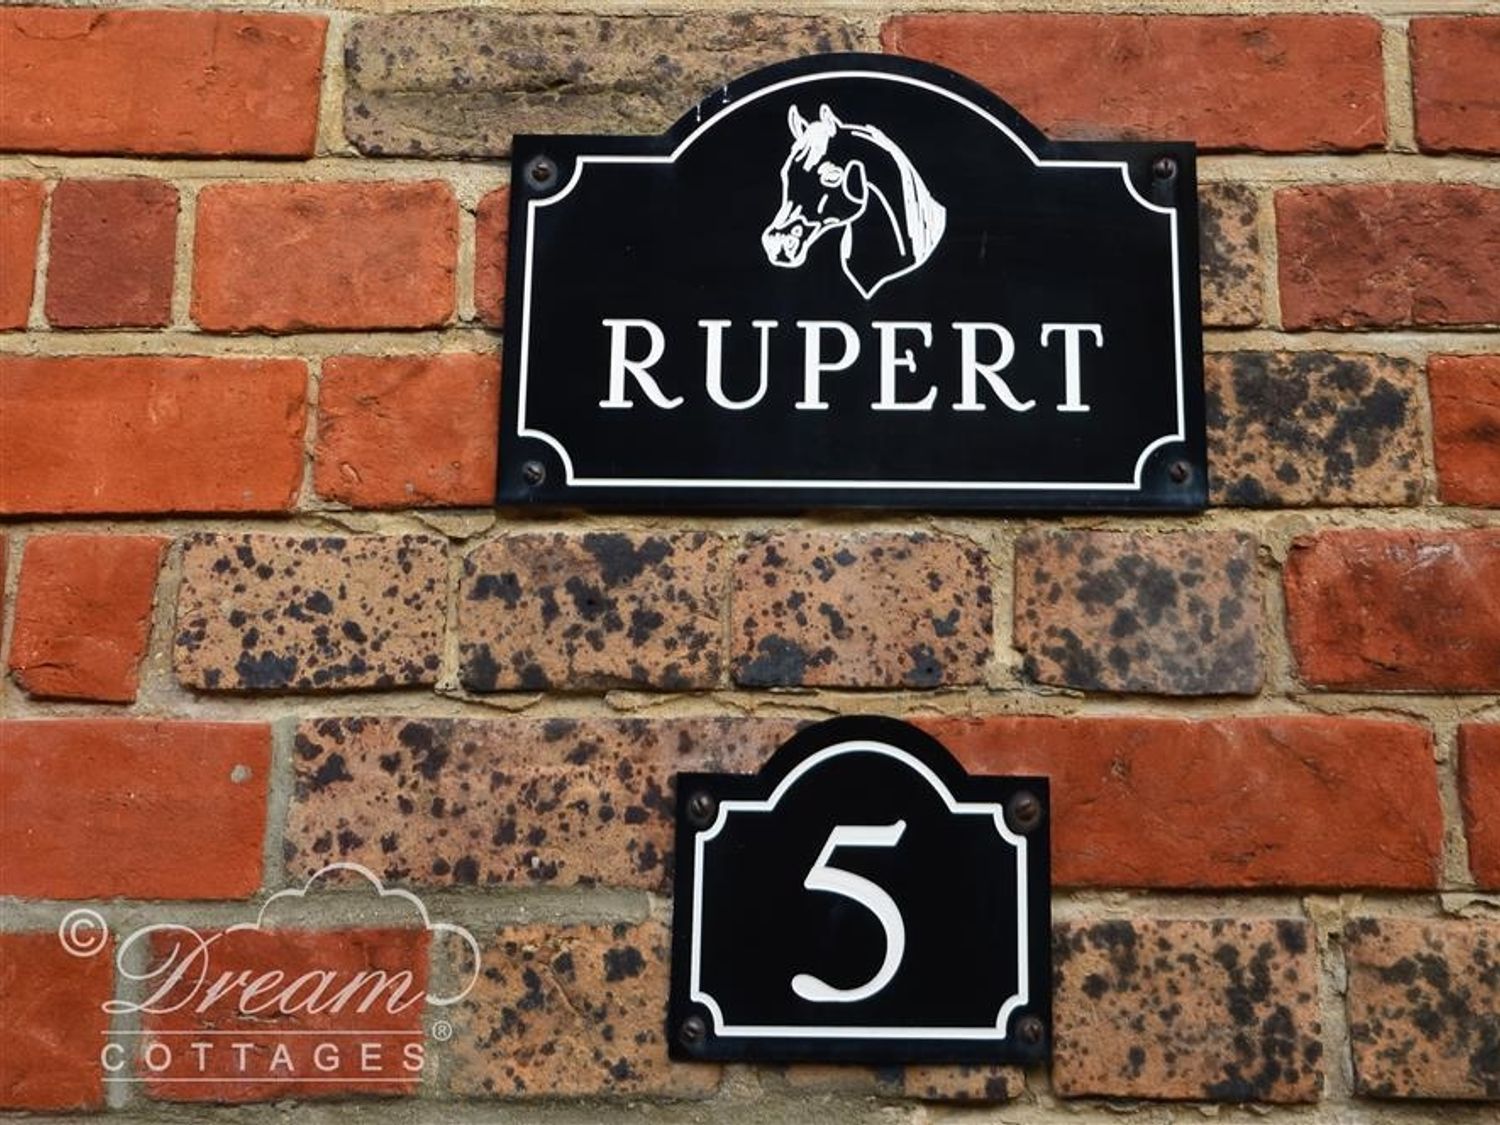 Rupert Cottage